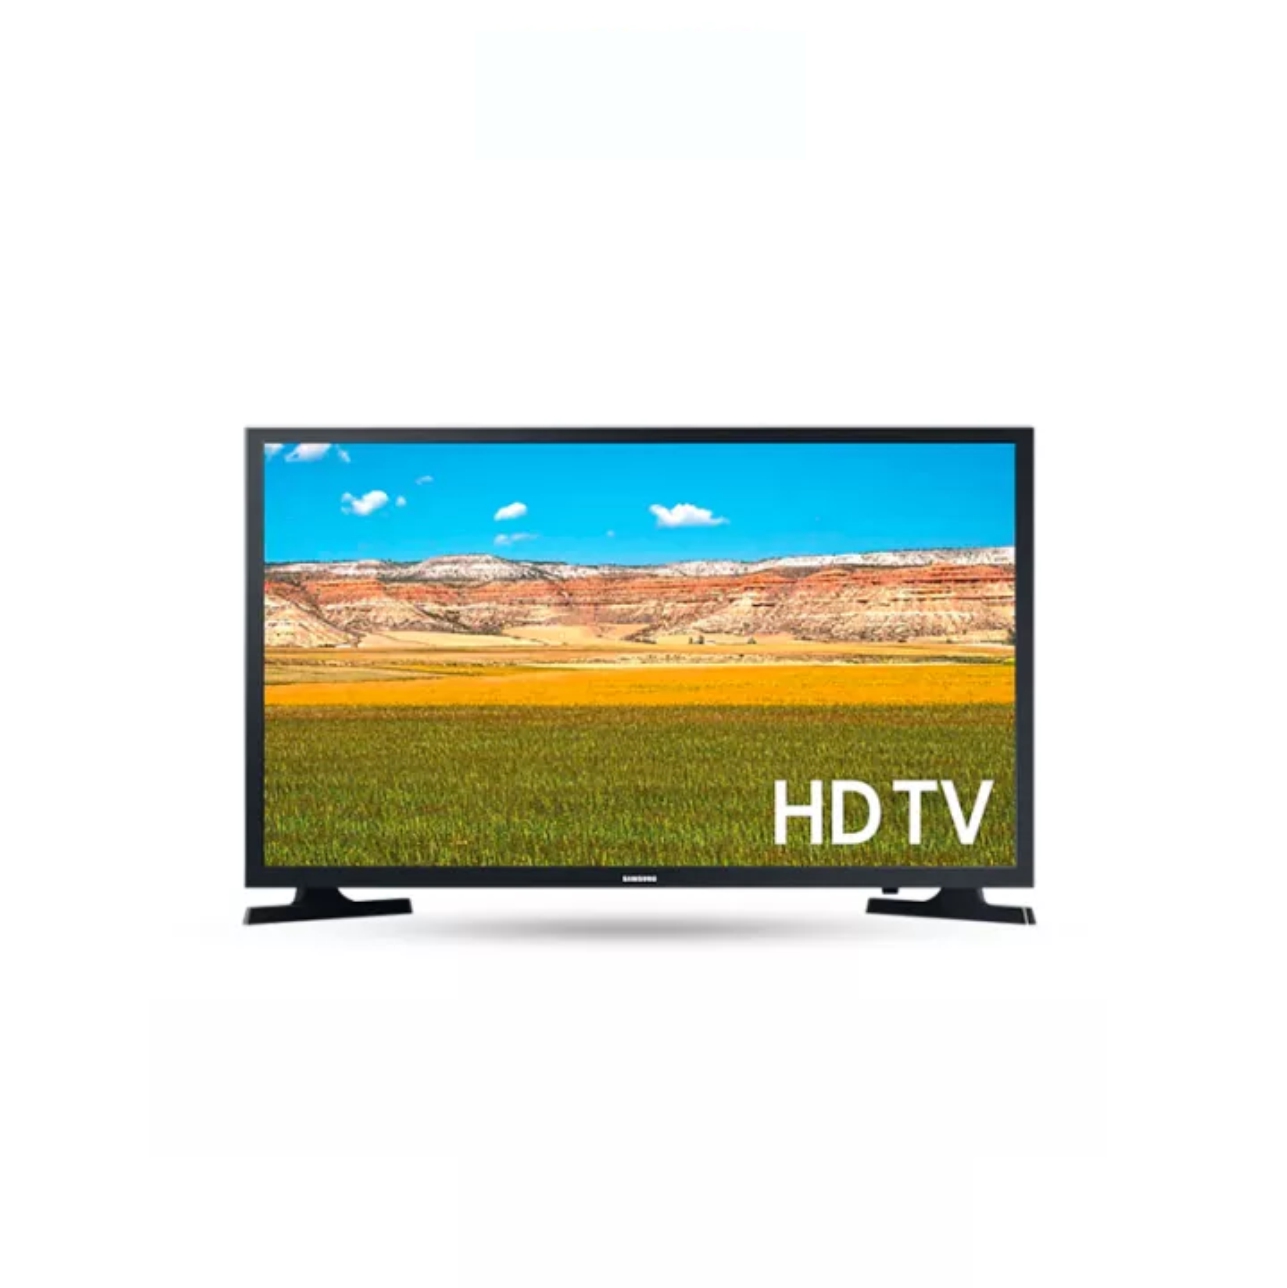 Samsung Smart TV 32 T 4500